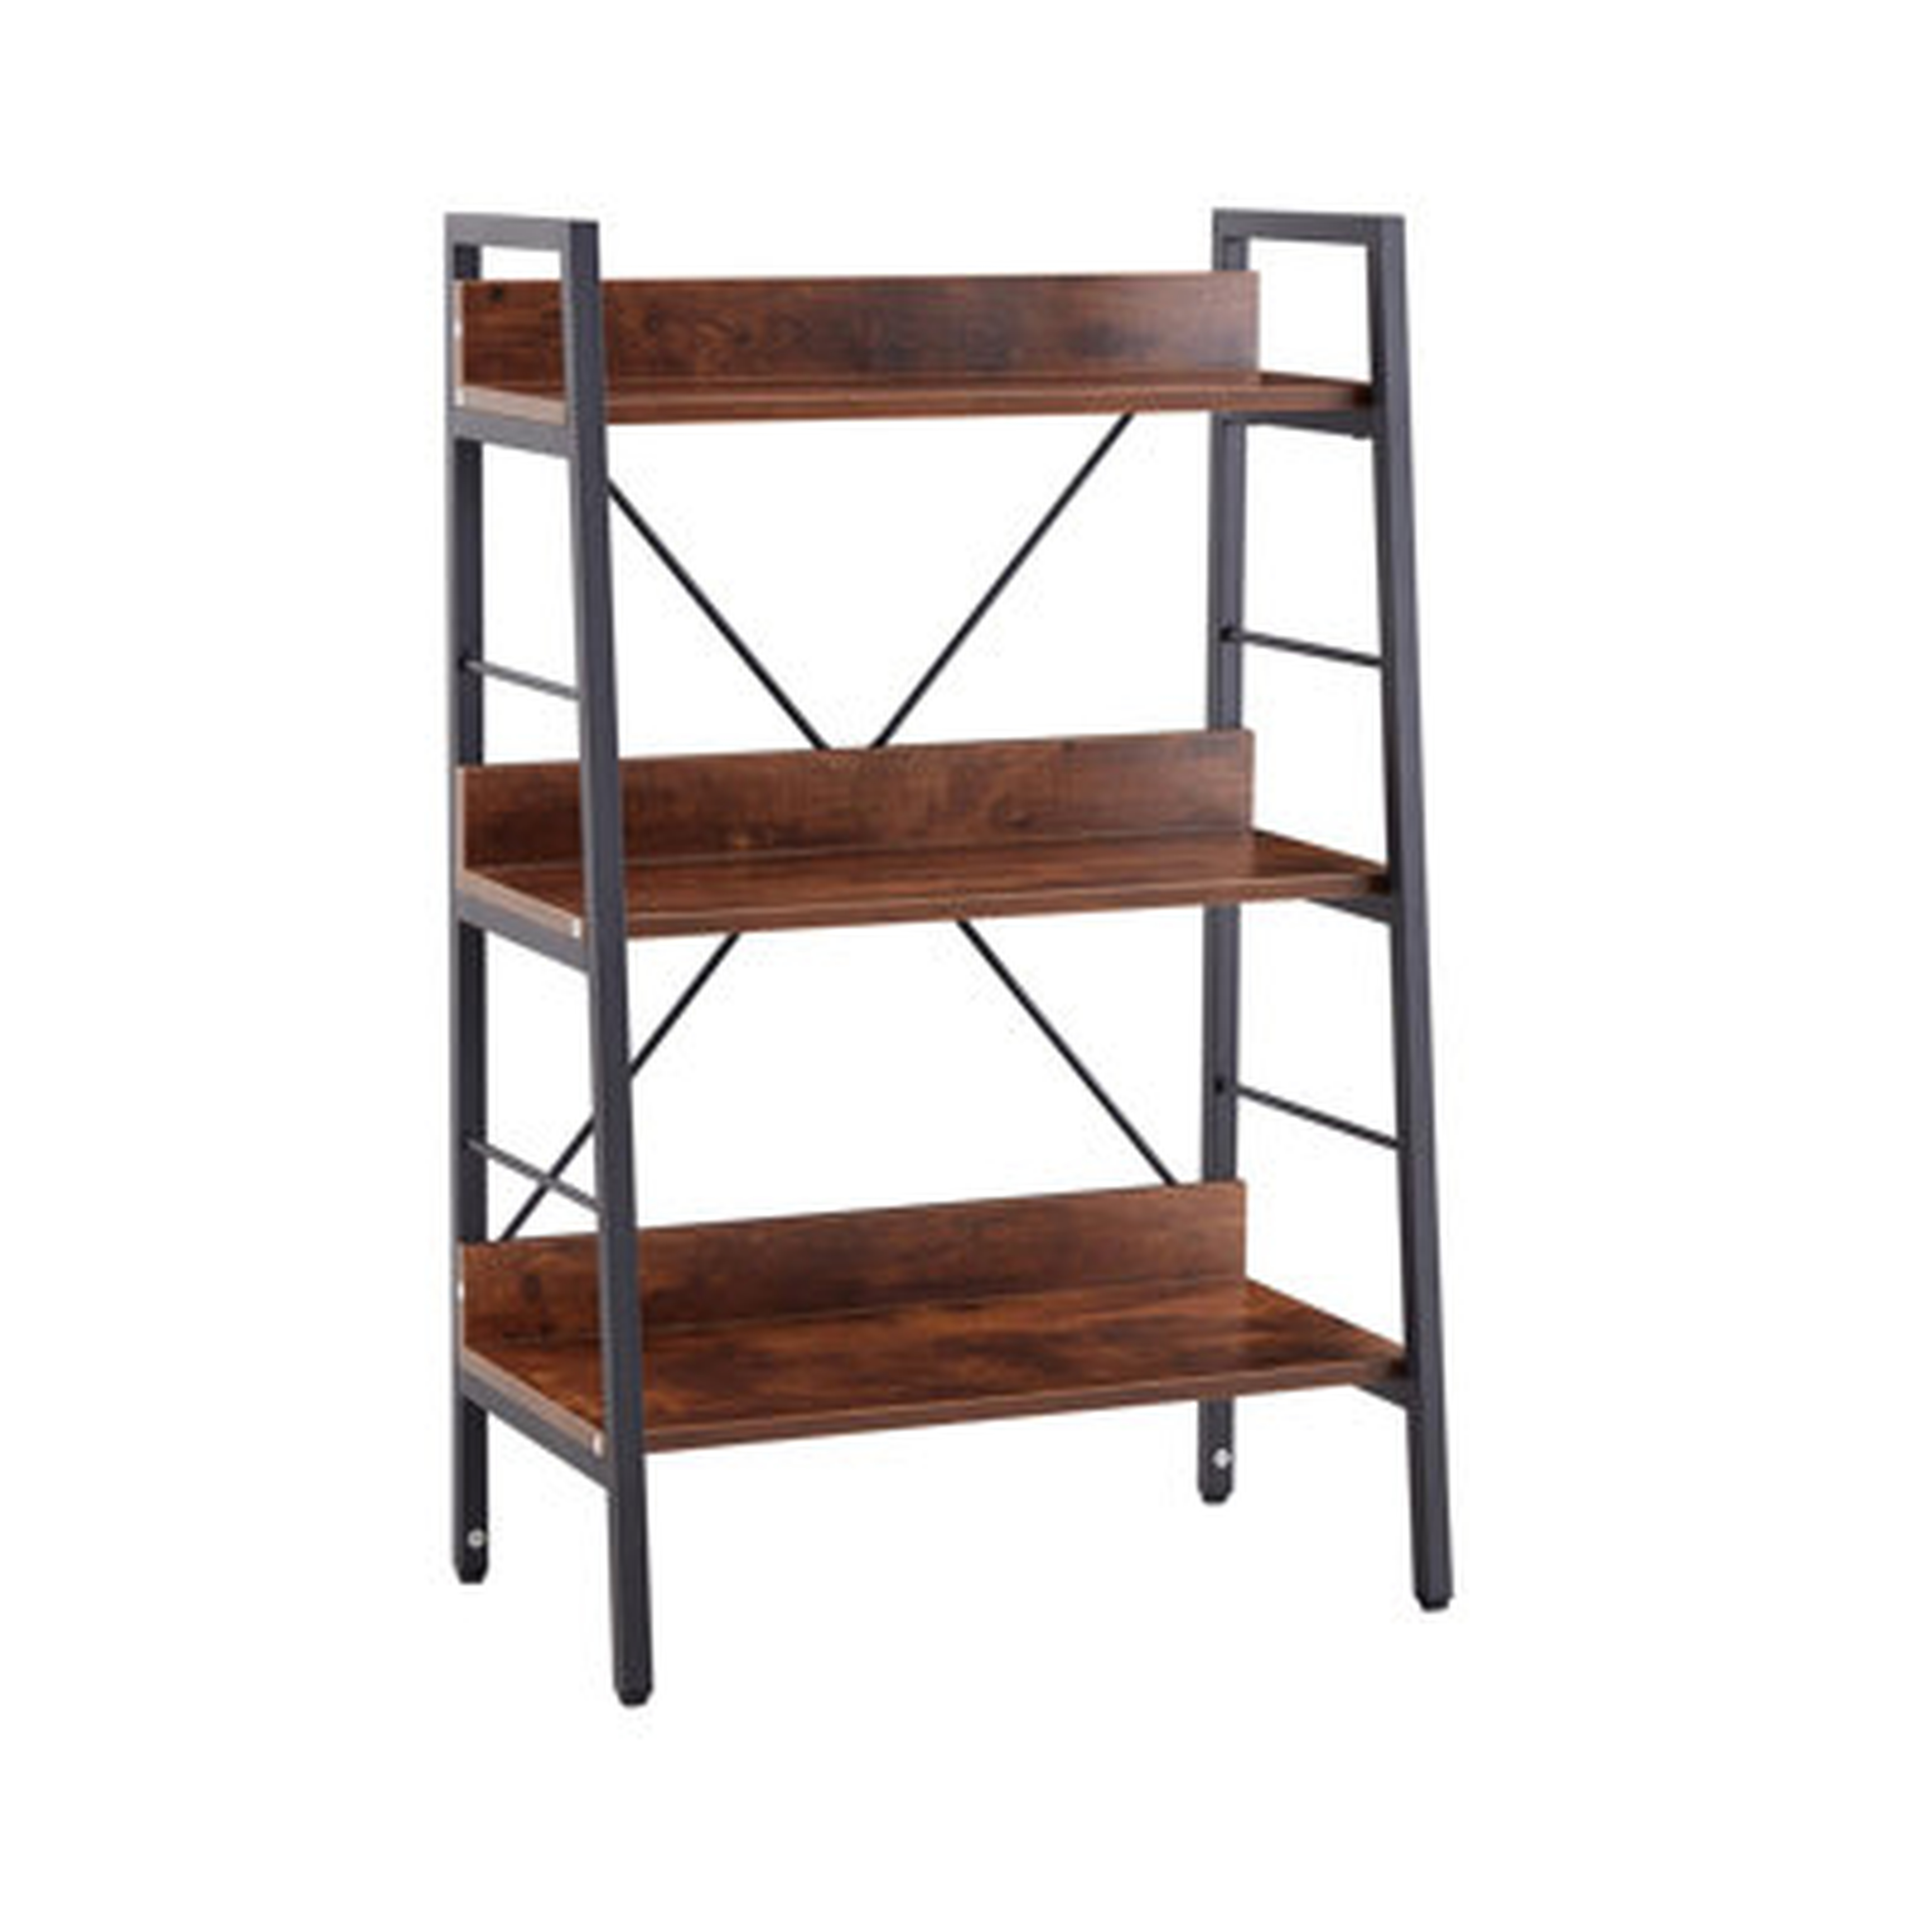 17 Stories 3 Layer Display Bookshelf H Ladder Shelf Storage Shelves Rack Shelf Unit Metal Frame - Wayfair